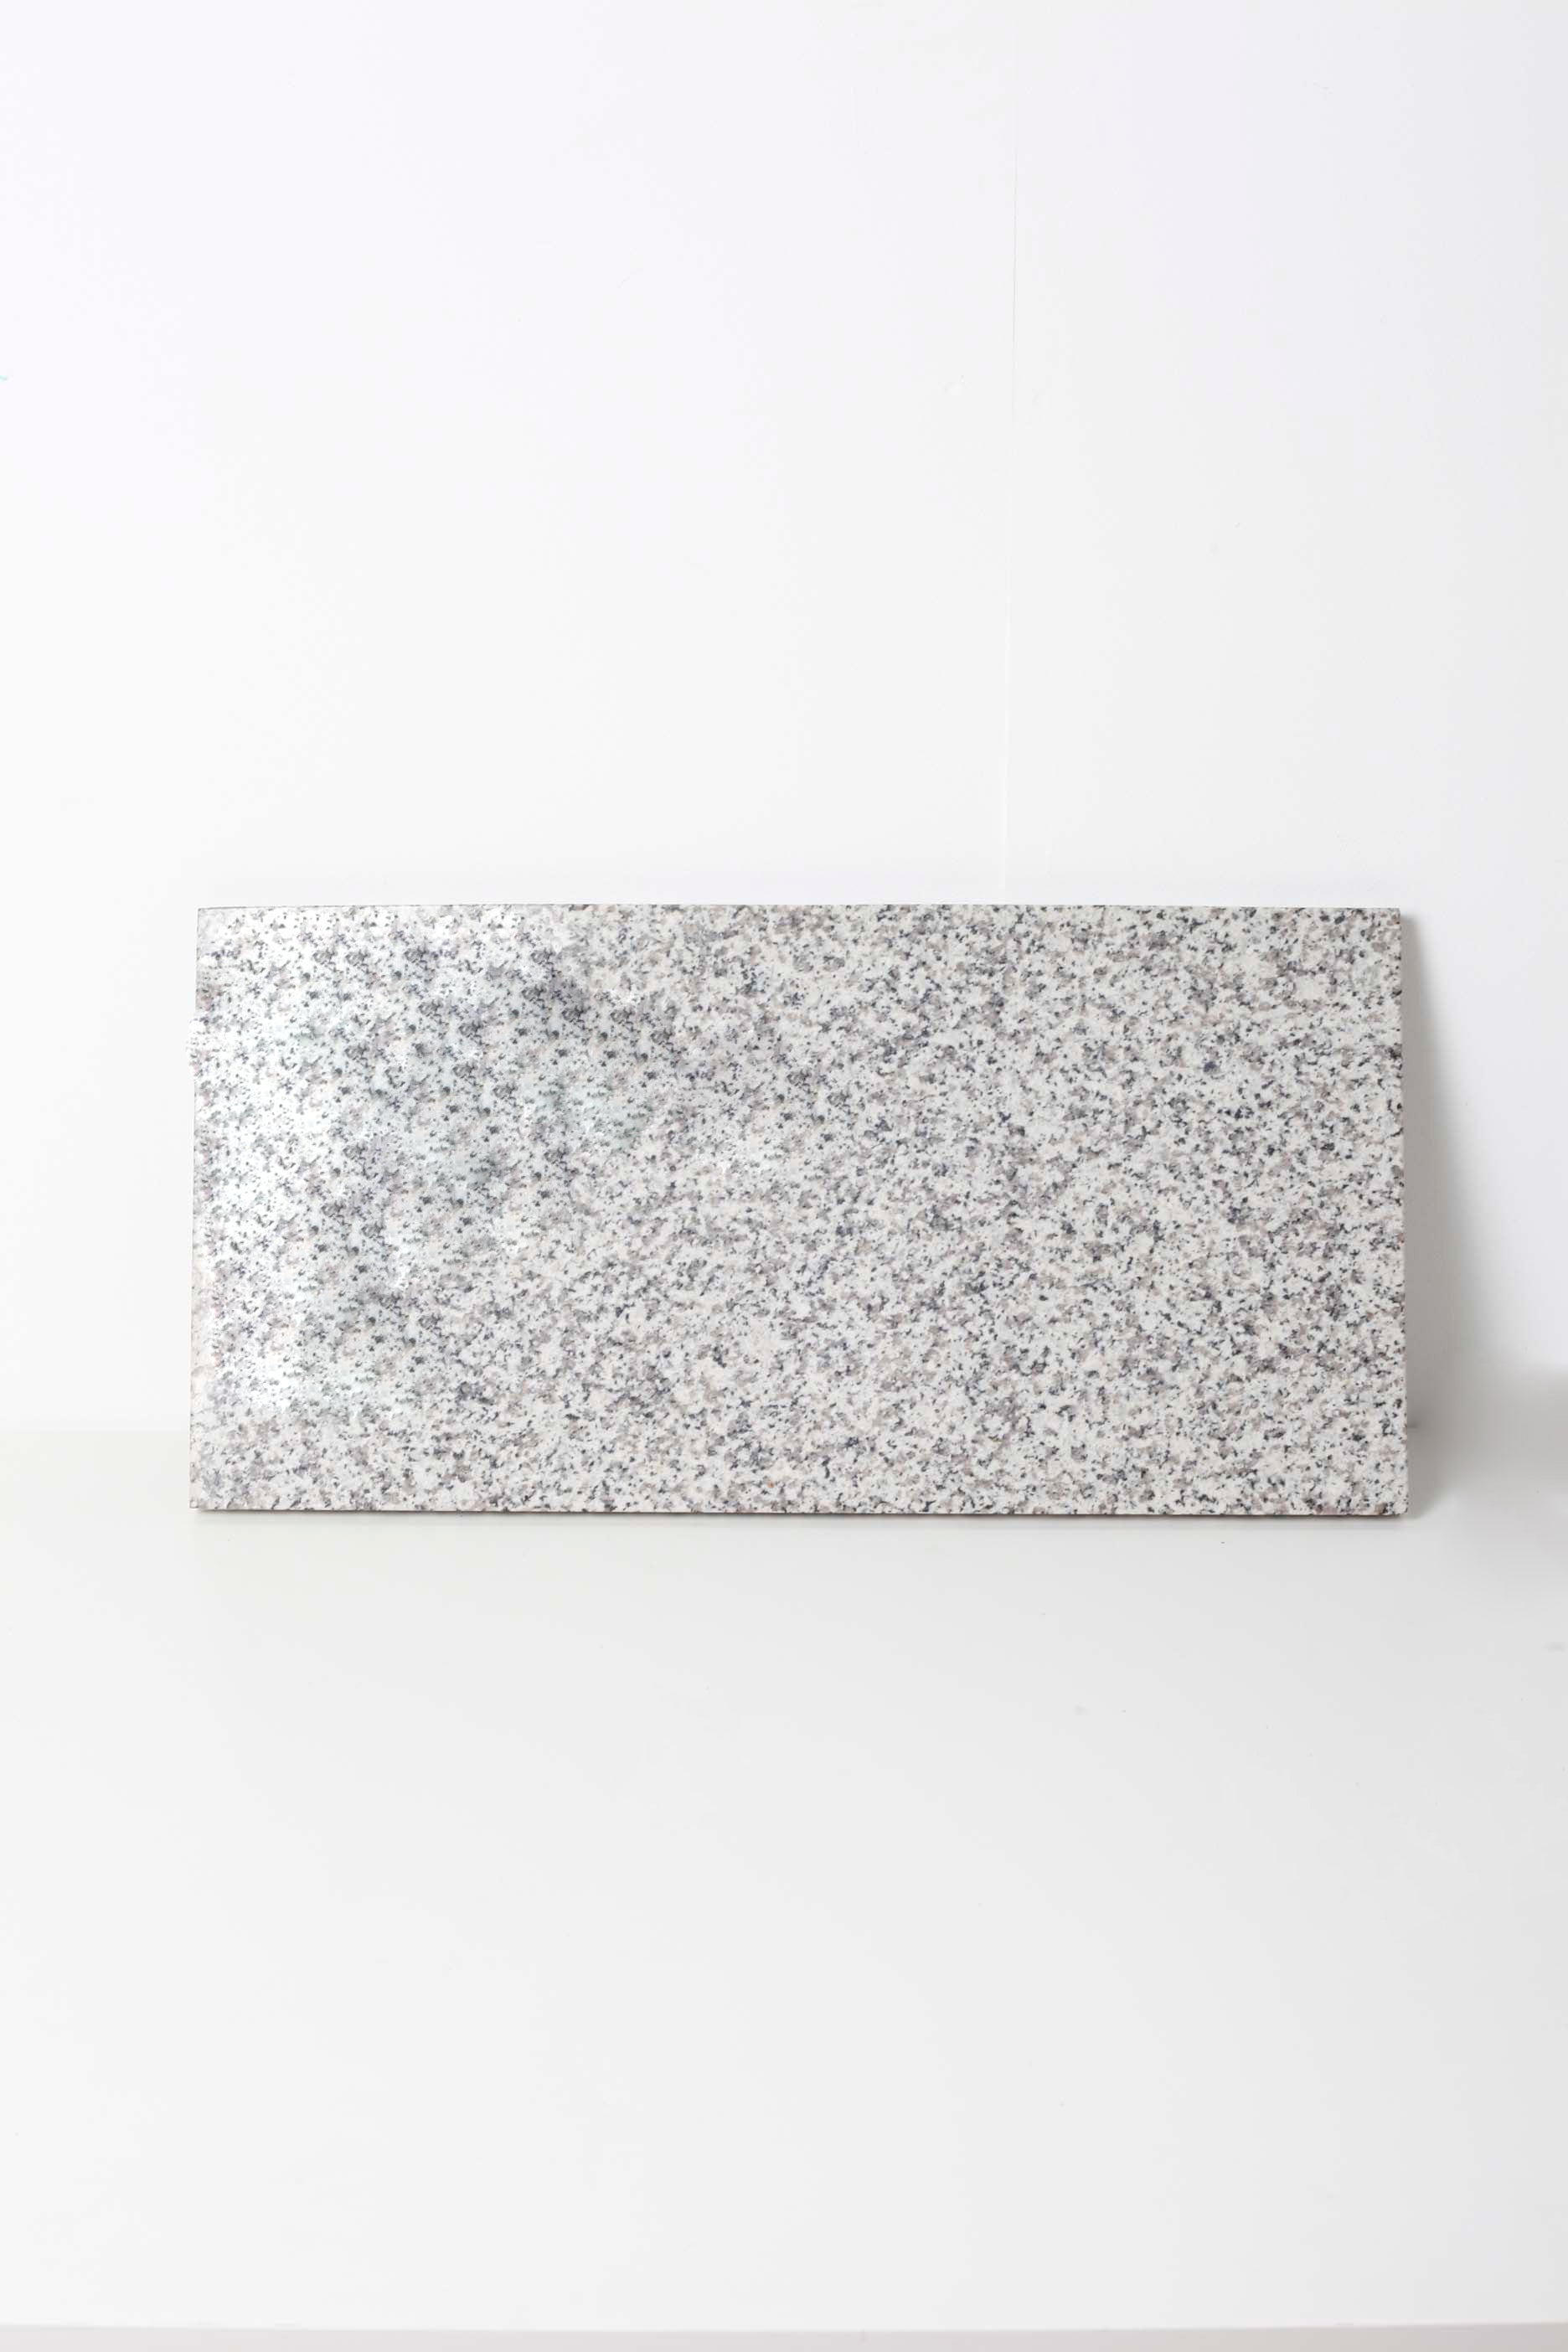 Rectangular Granite Tile